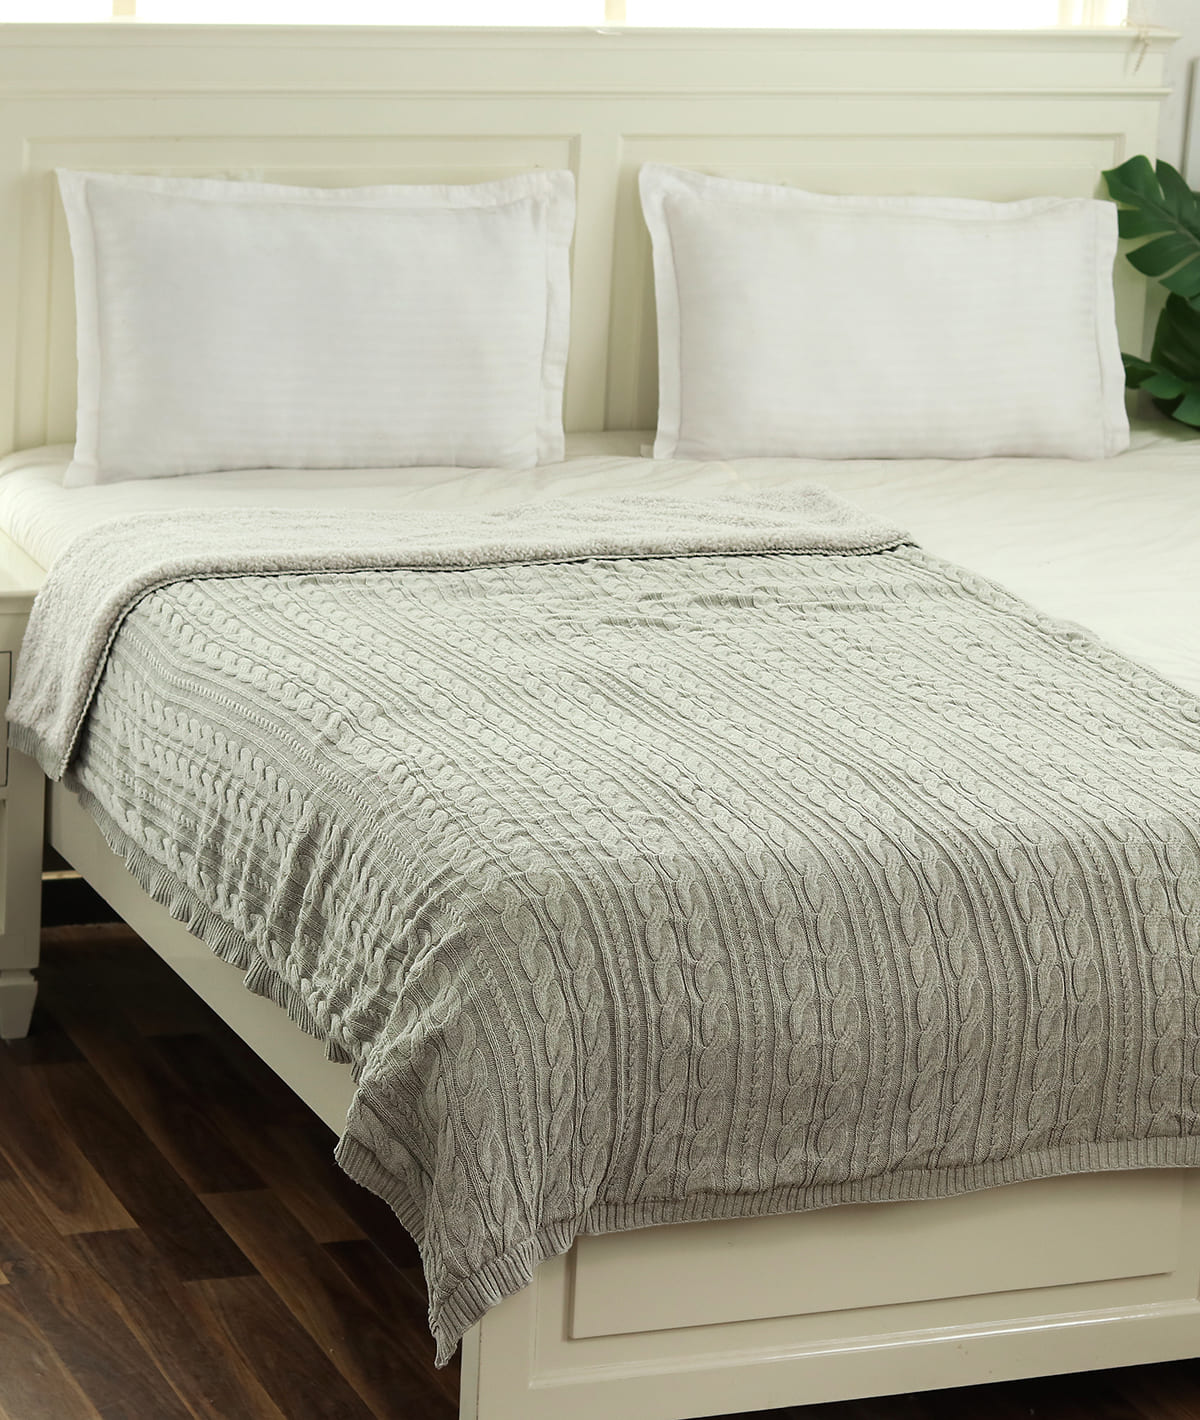 buy online single bed Sherpa blanket